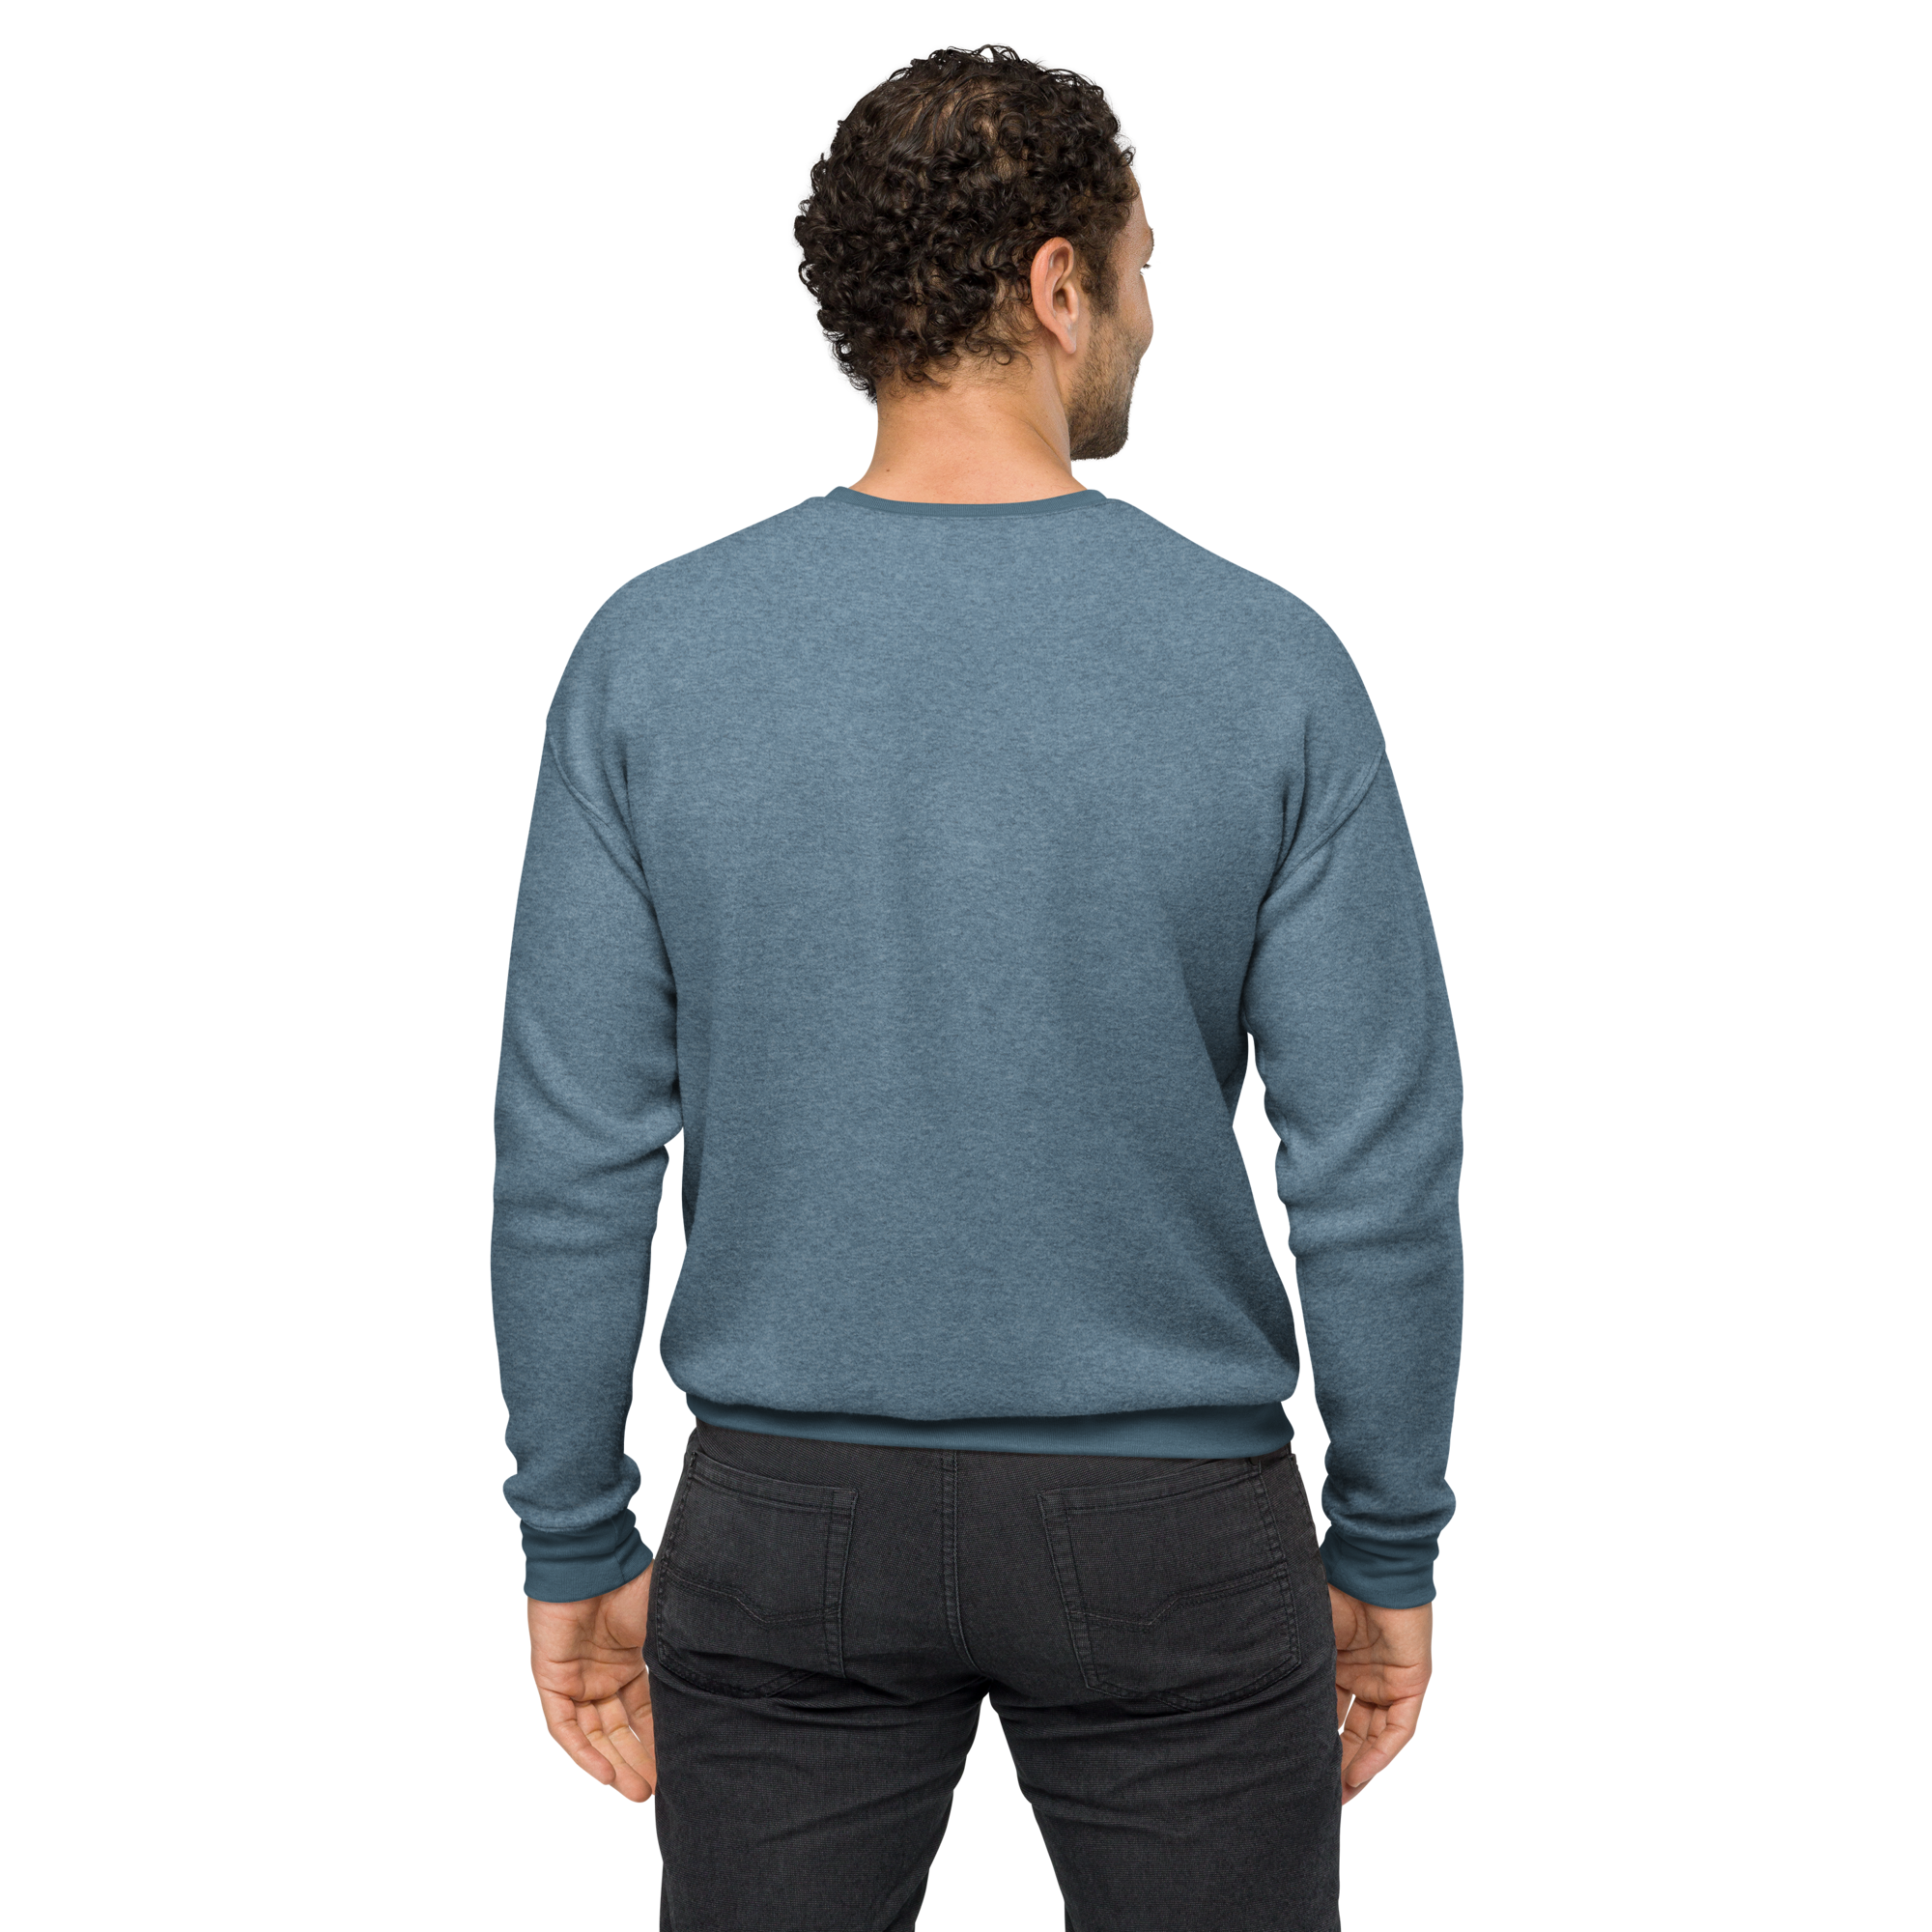 Board Life sueded fleece sweatshirt